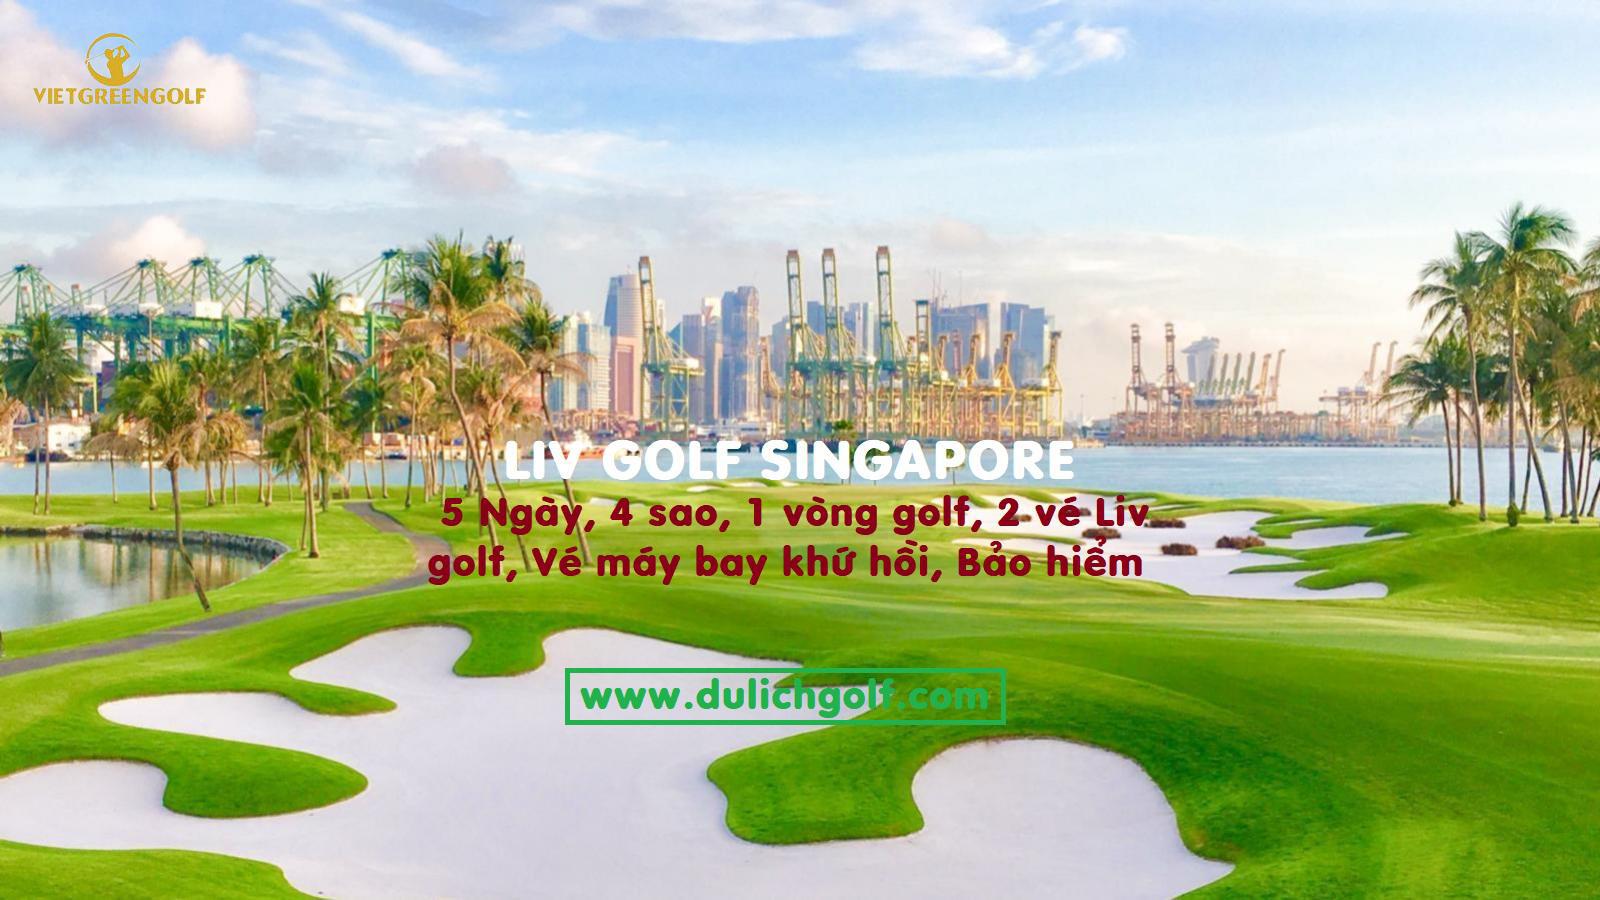 Tour LIV Golf Singapore 5 ngày + ks 4 sao + 1v golf + 2 vé xem Liv Golf - SIÊU RẺ